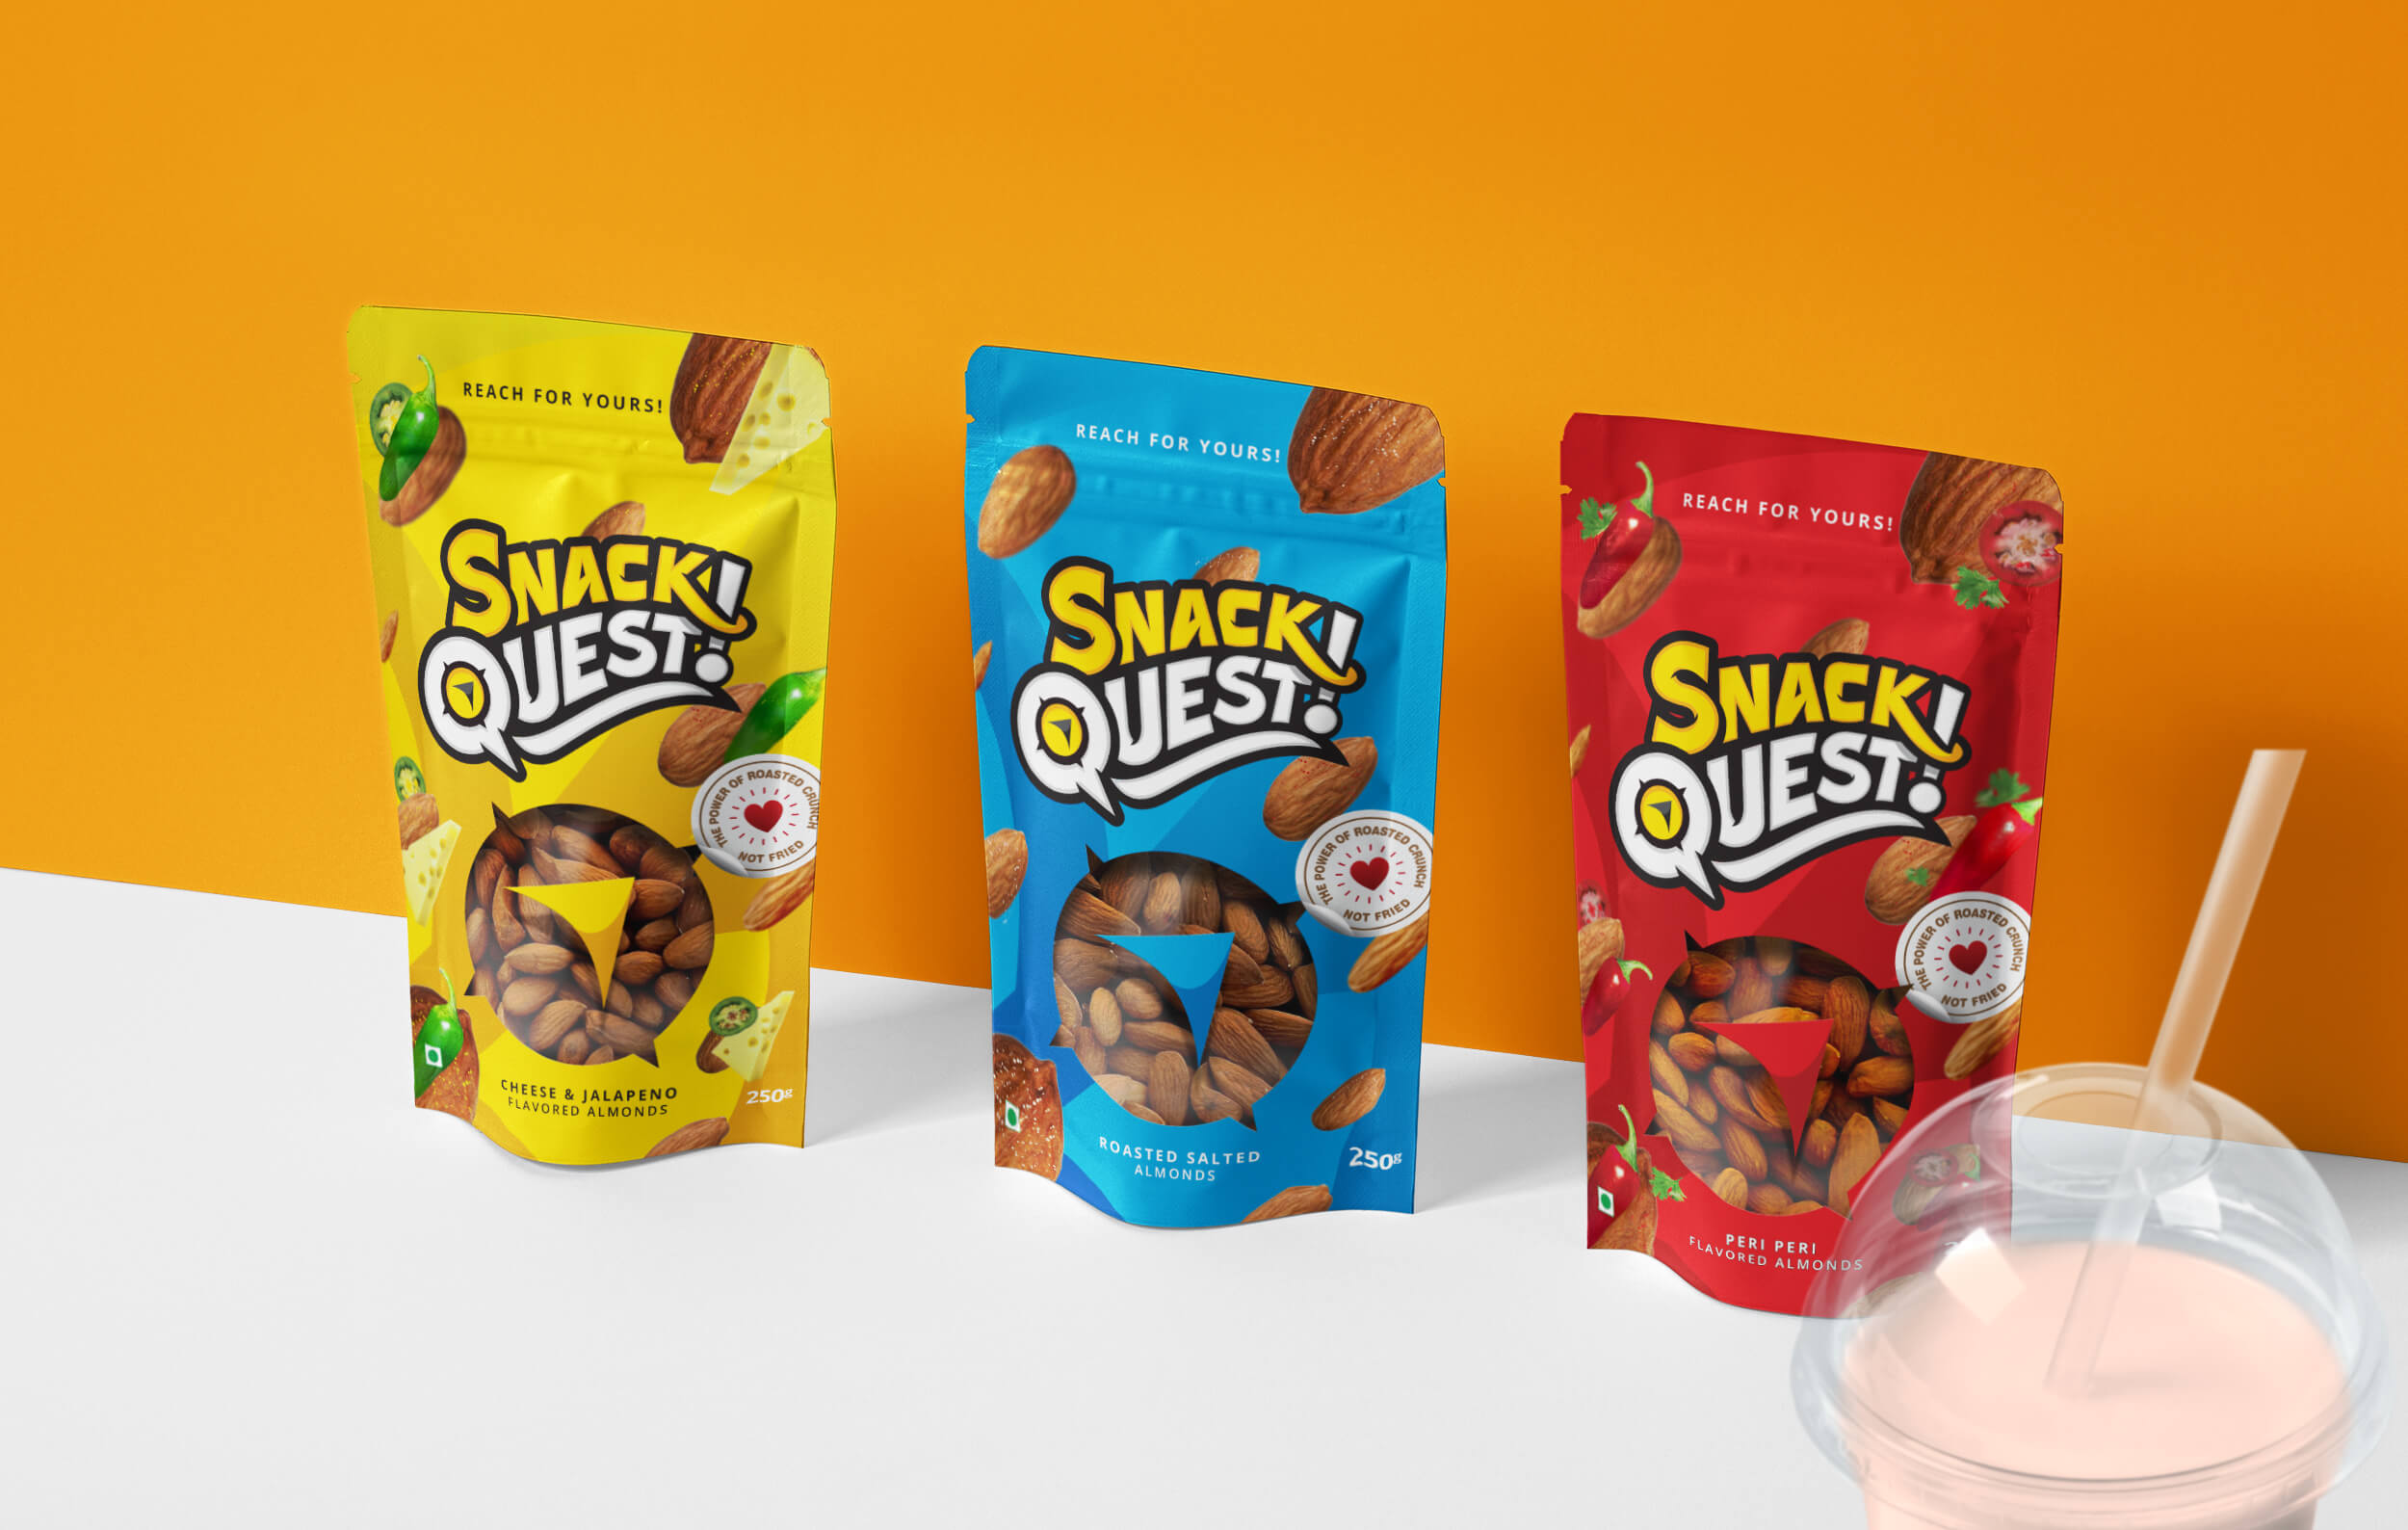 Snack-Quest-brand-identity-packaging-design-by-Artisticodopeo-Designz(4)_1.jpg Image